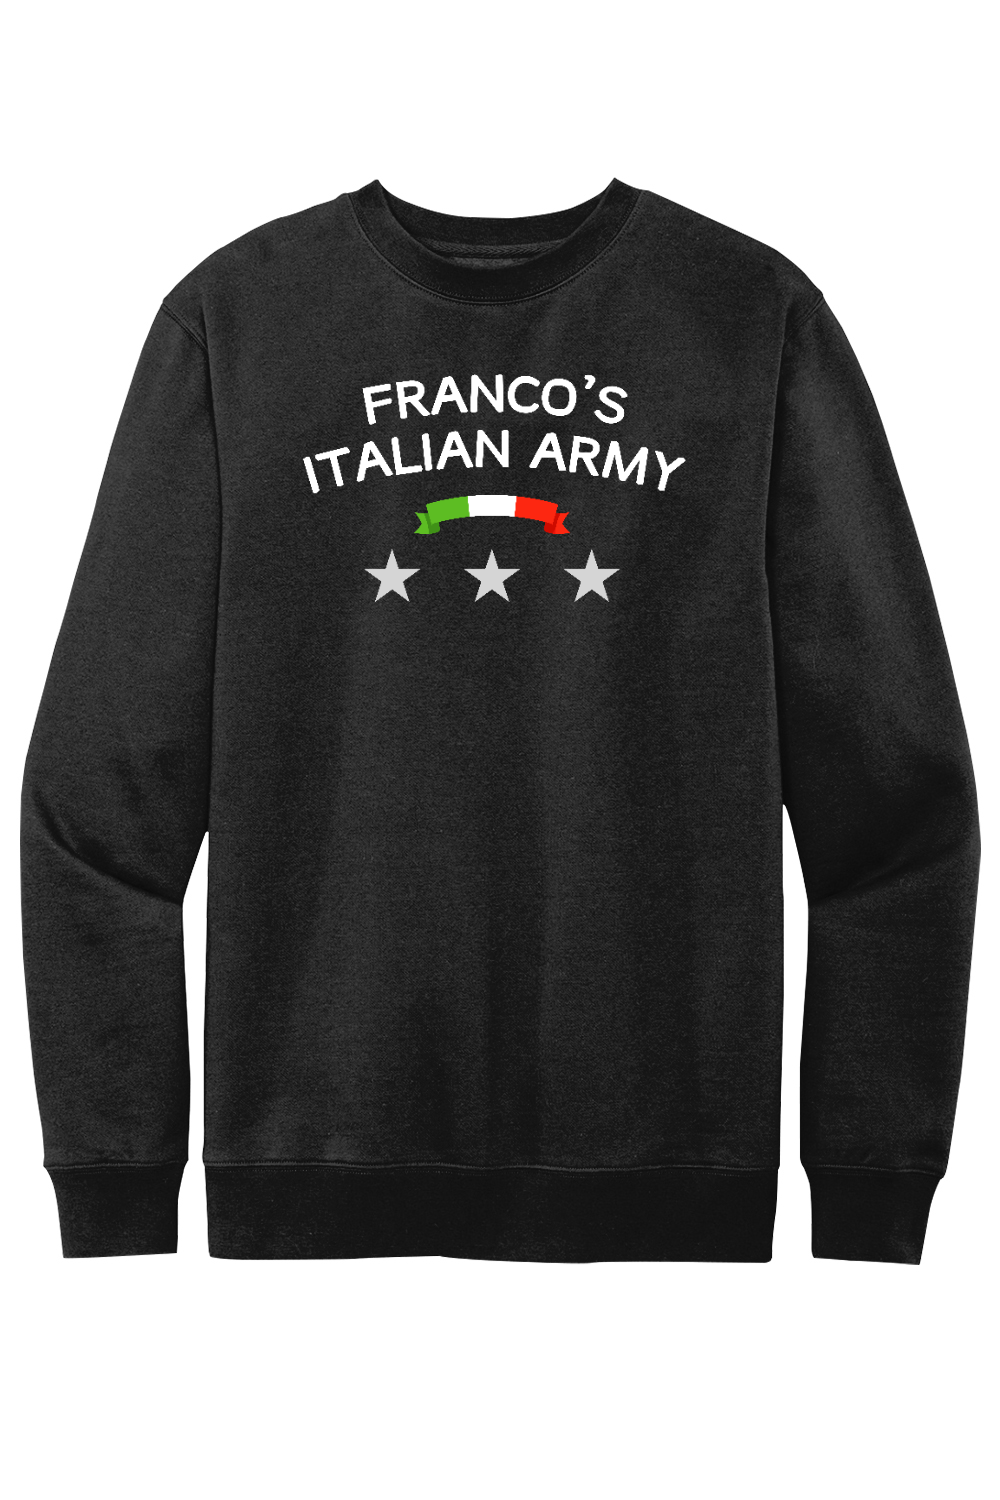 Franco's Italian Army - Fleece Crewneck Seatshirt - Yinzylvania